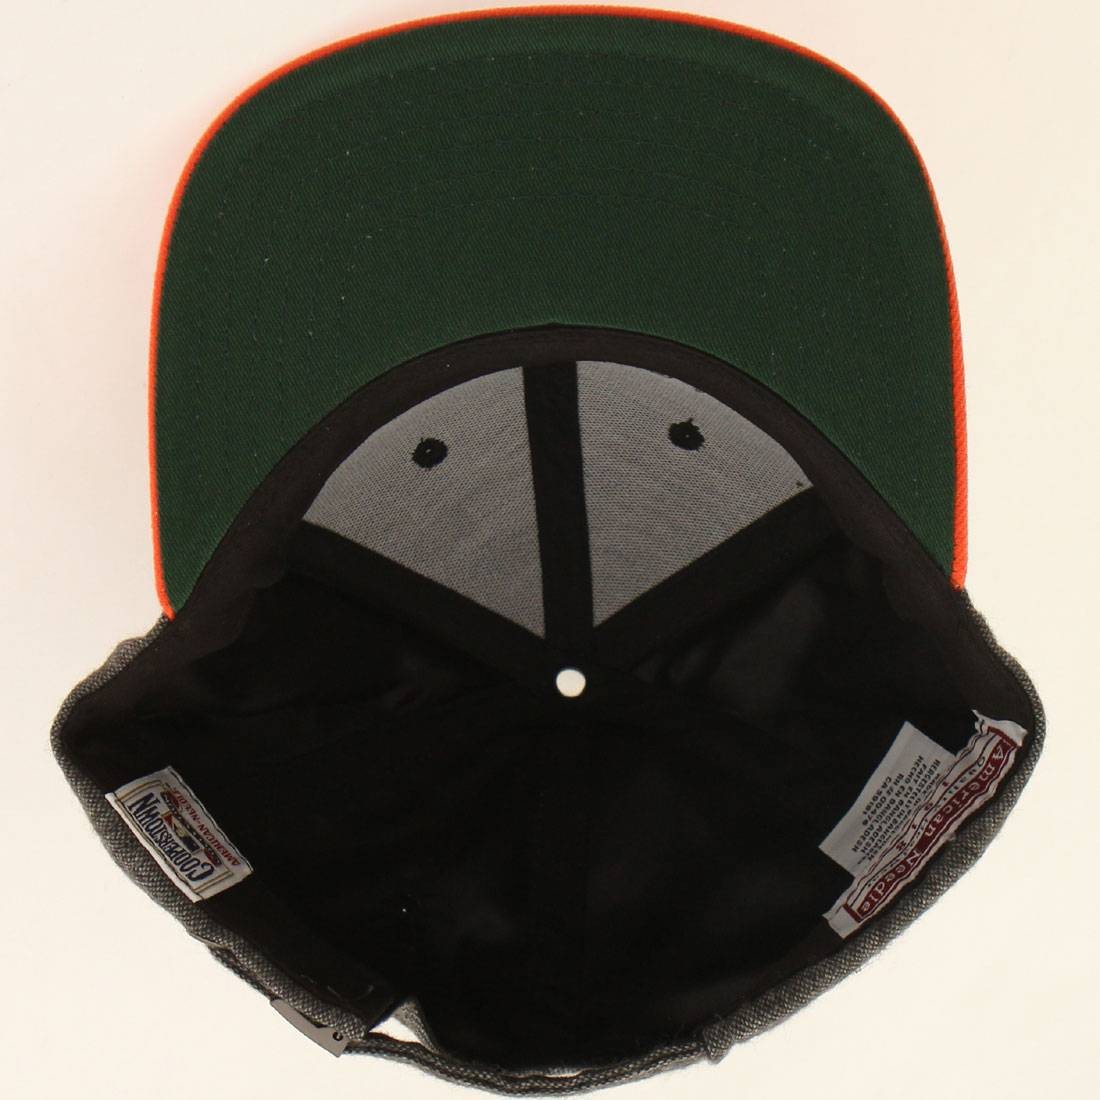 American Needle MLB San Francisco Giants Snapback Cap - Flak brown orange